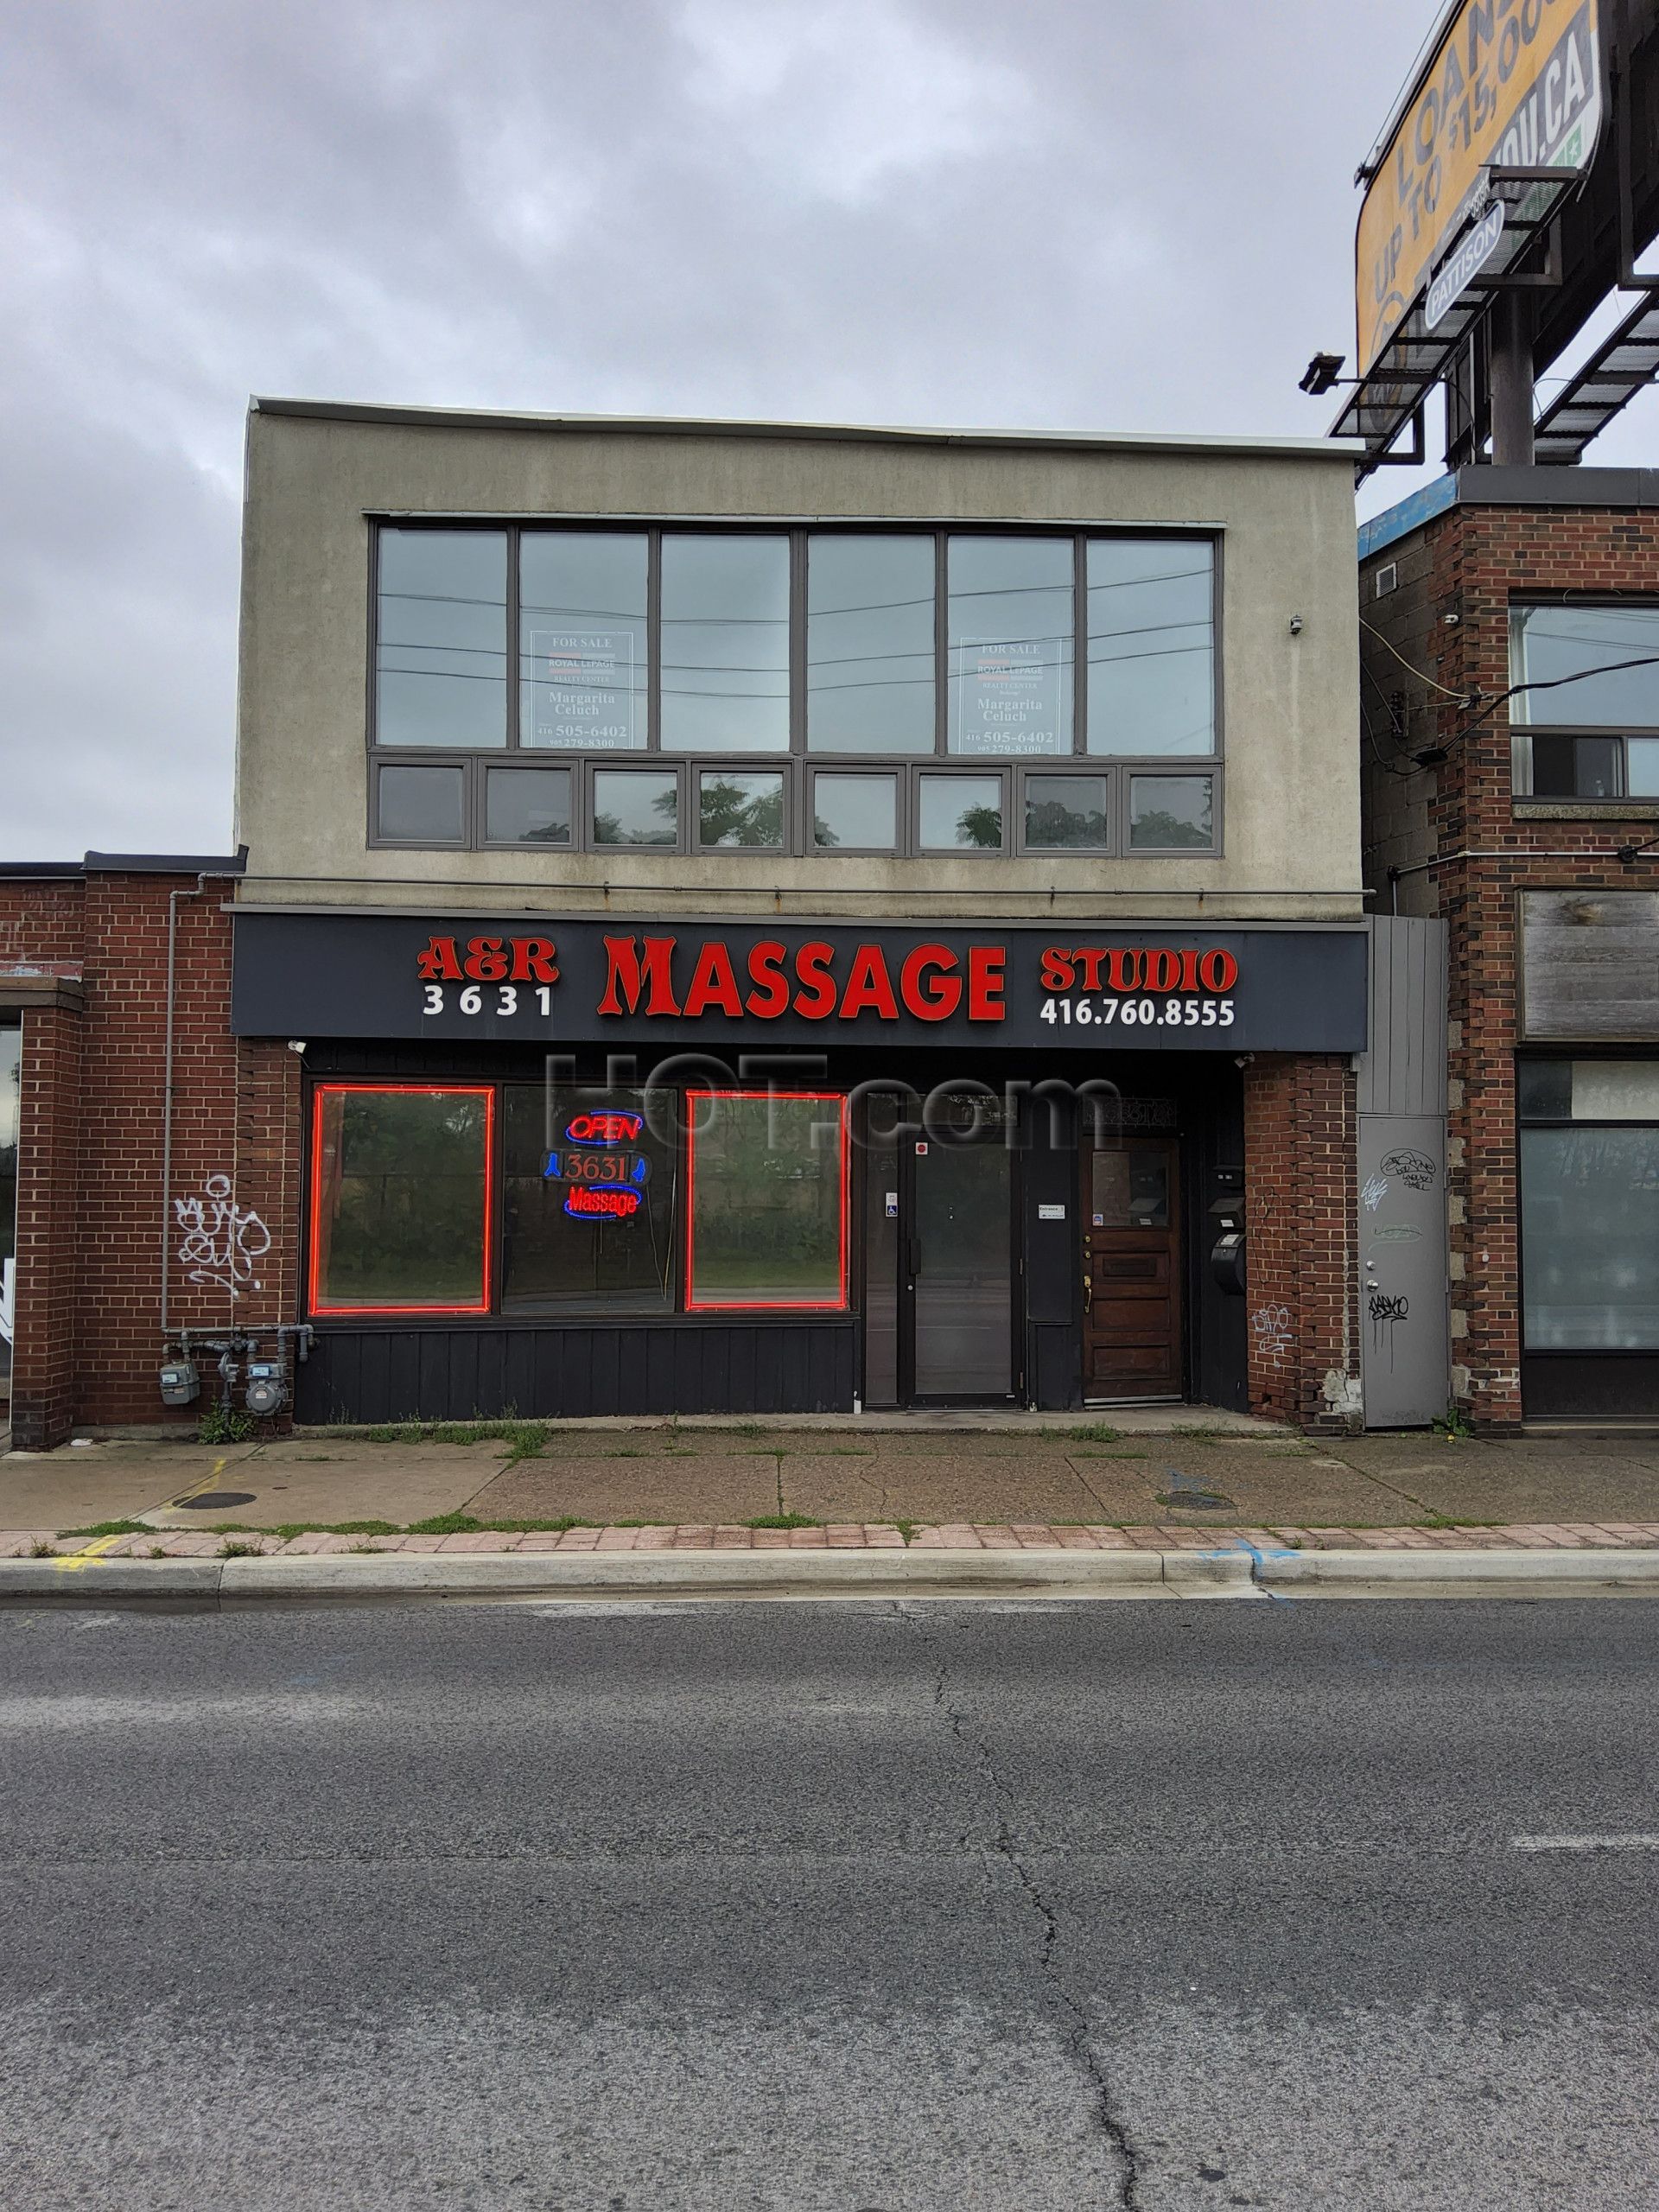 Toronto, Ontario A & R Massage Studio